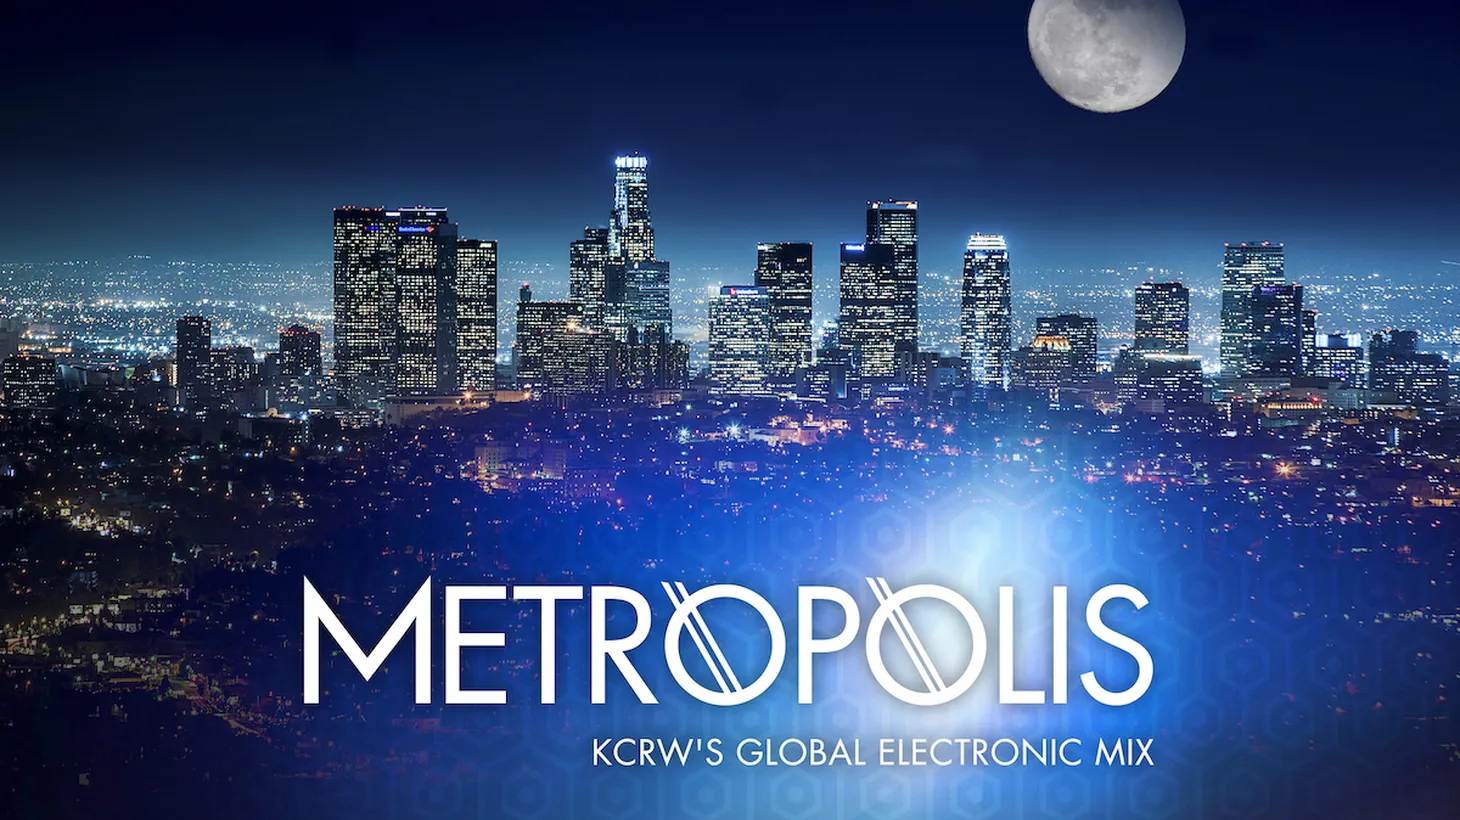 Metropolis playlist, December 18, 2021.